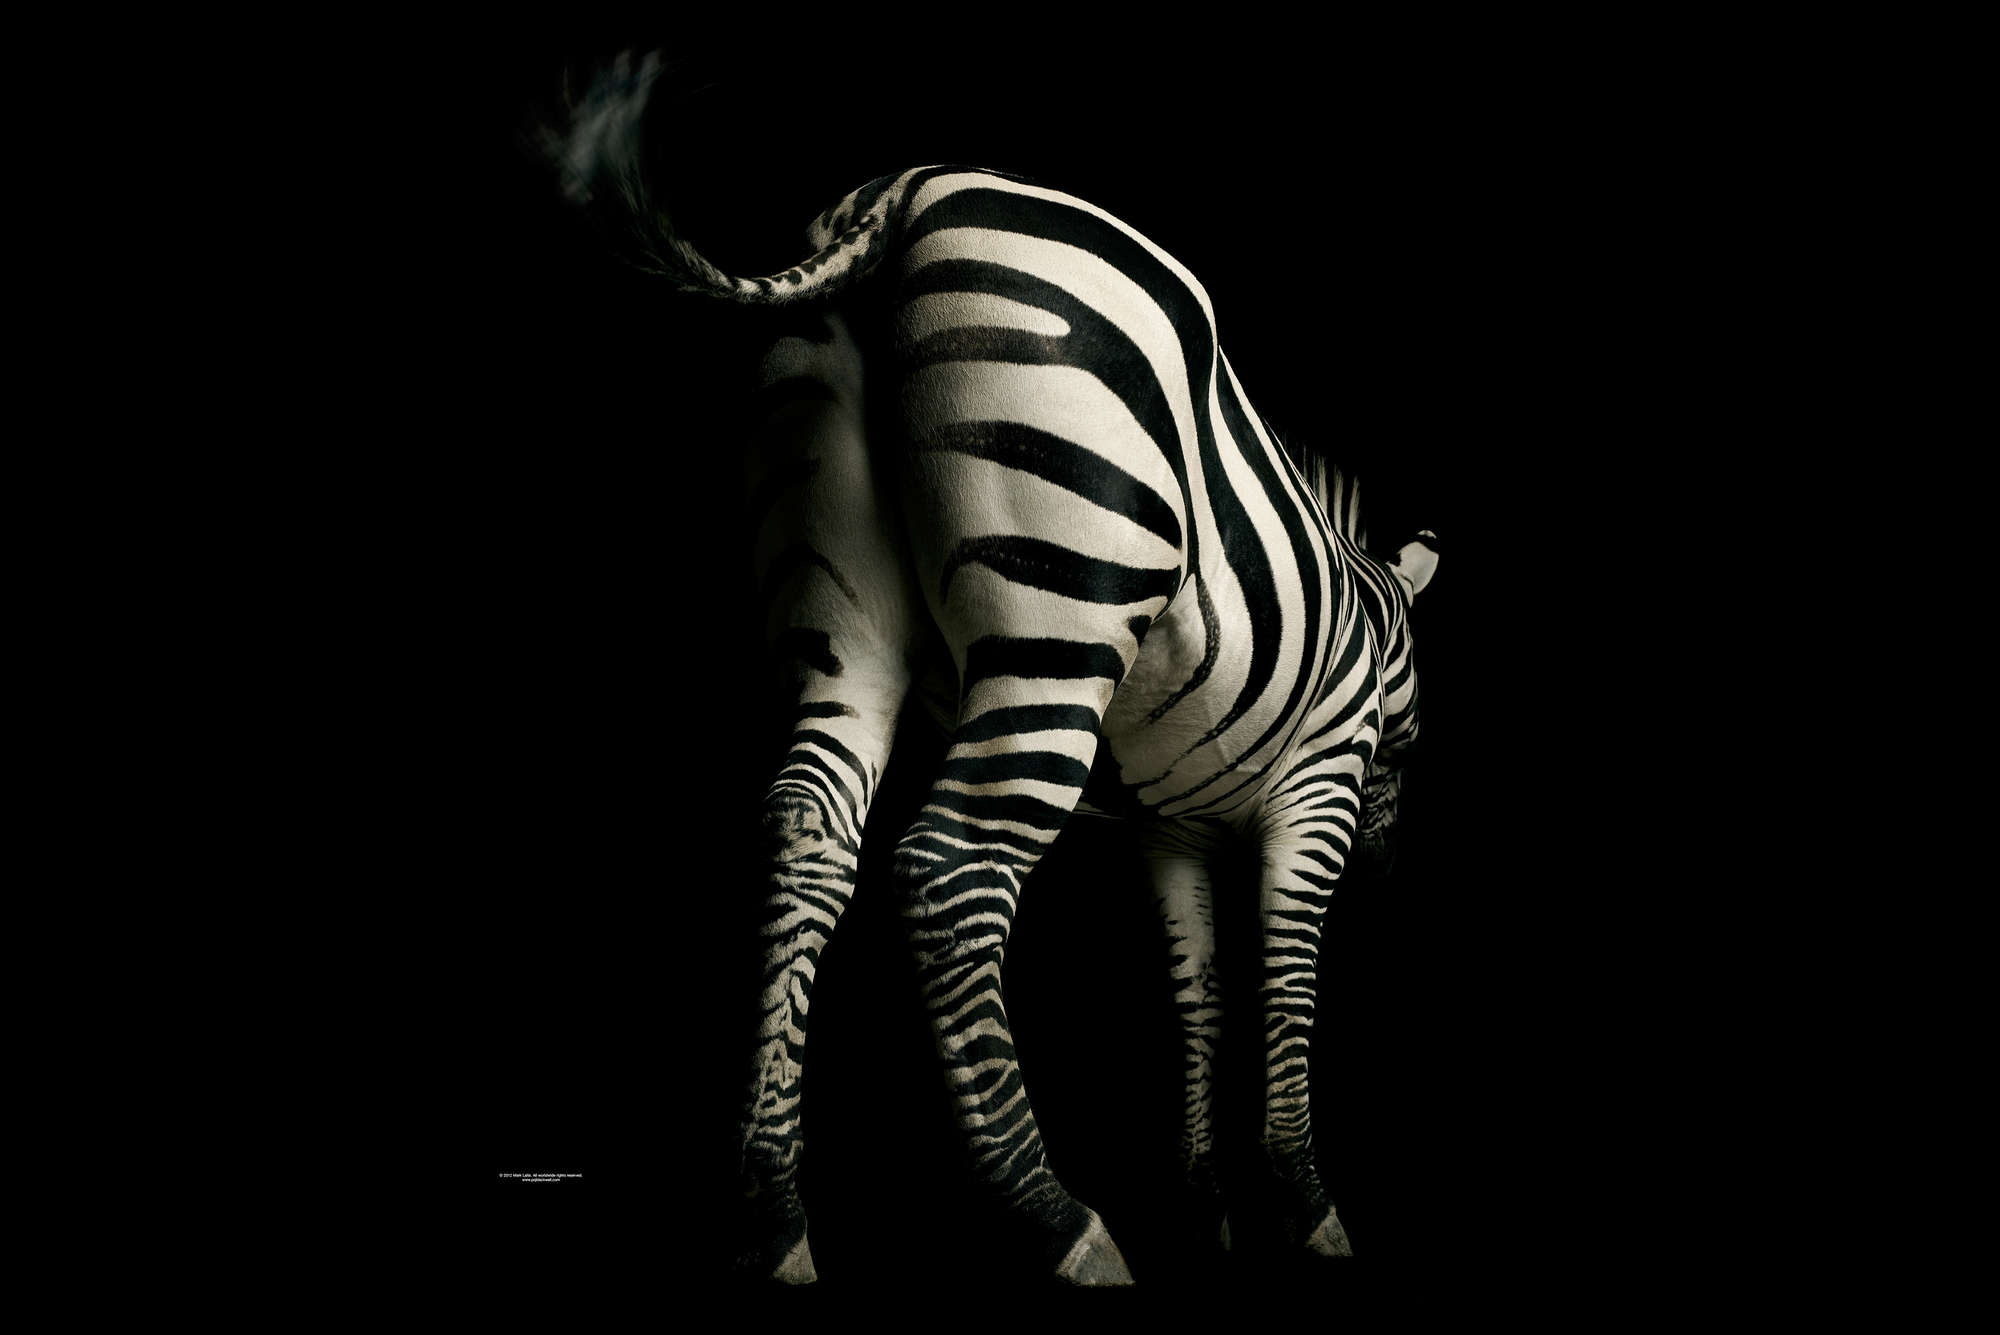             Zebra rug - Dierenportret Behang
        